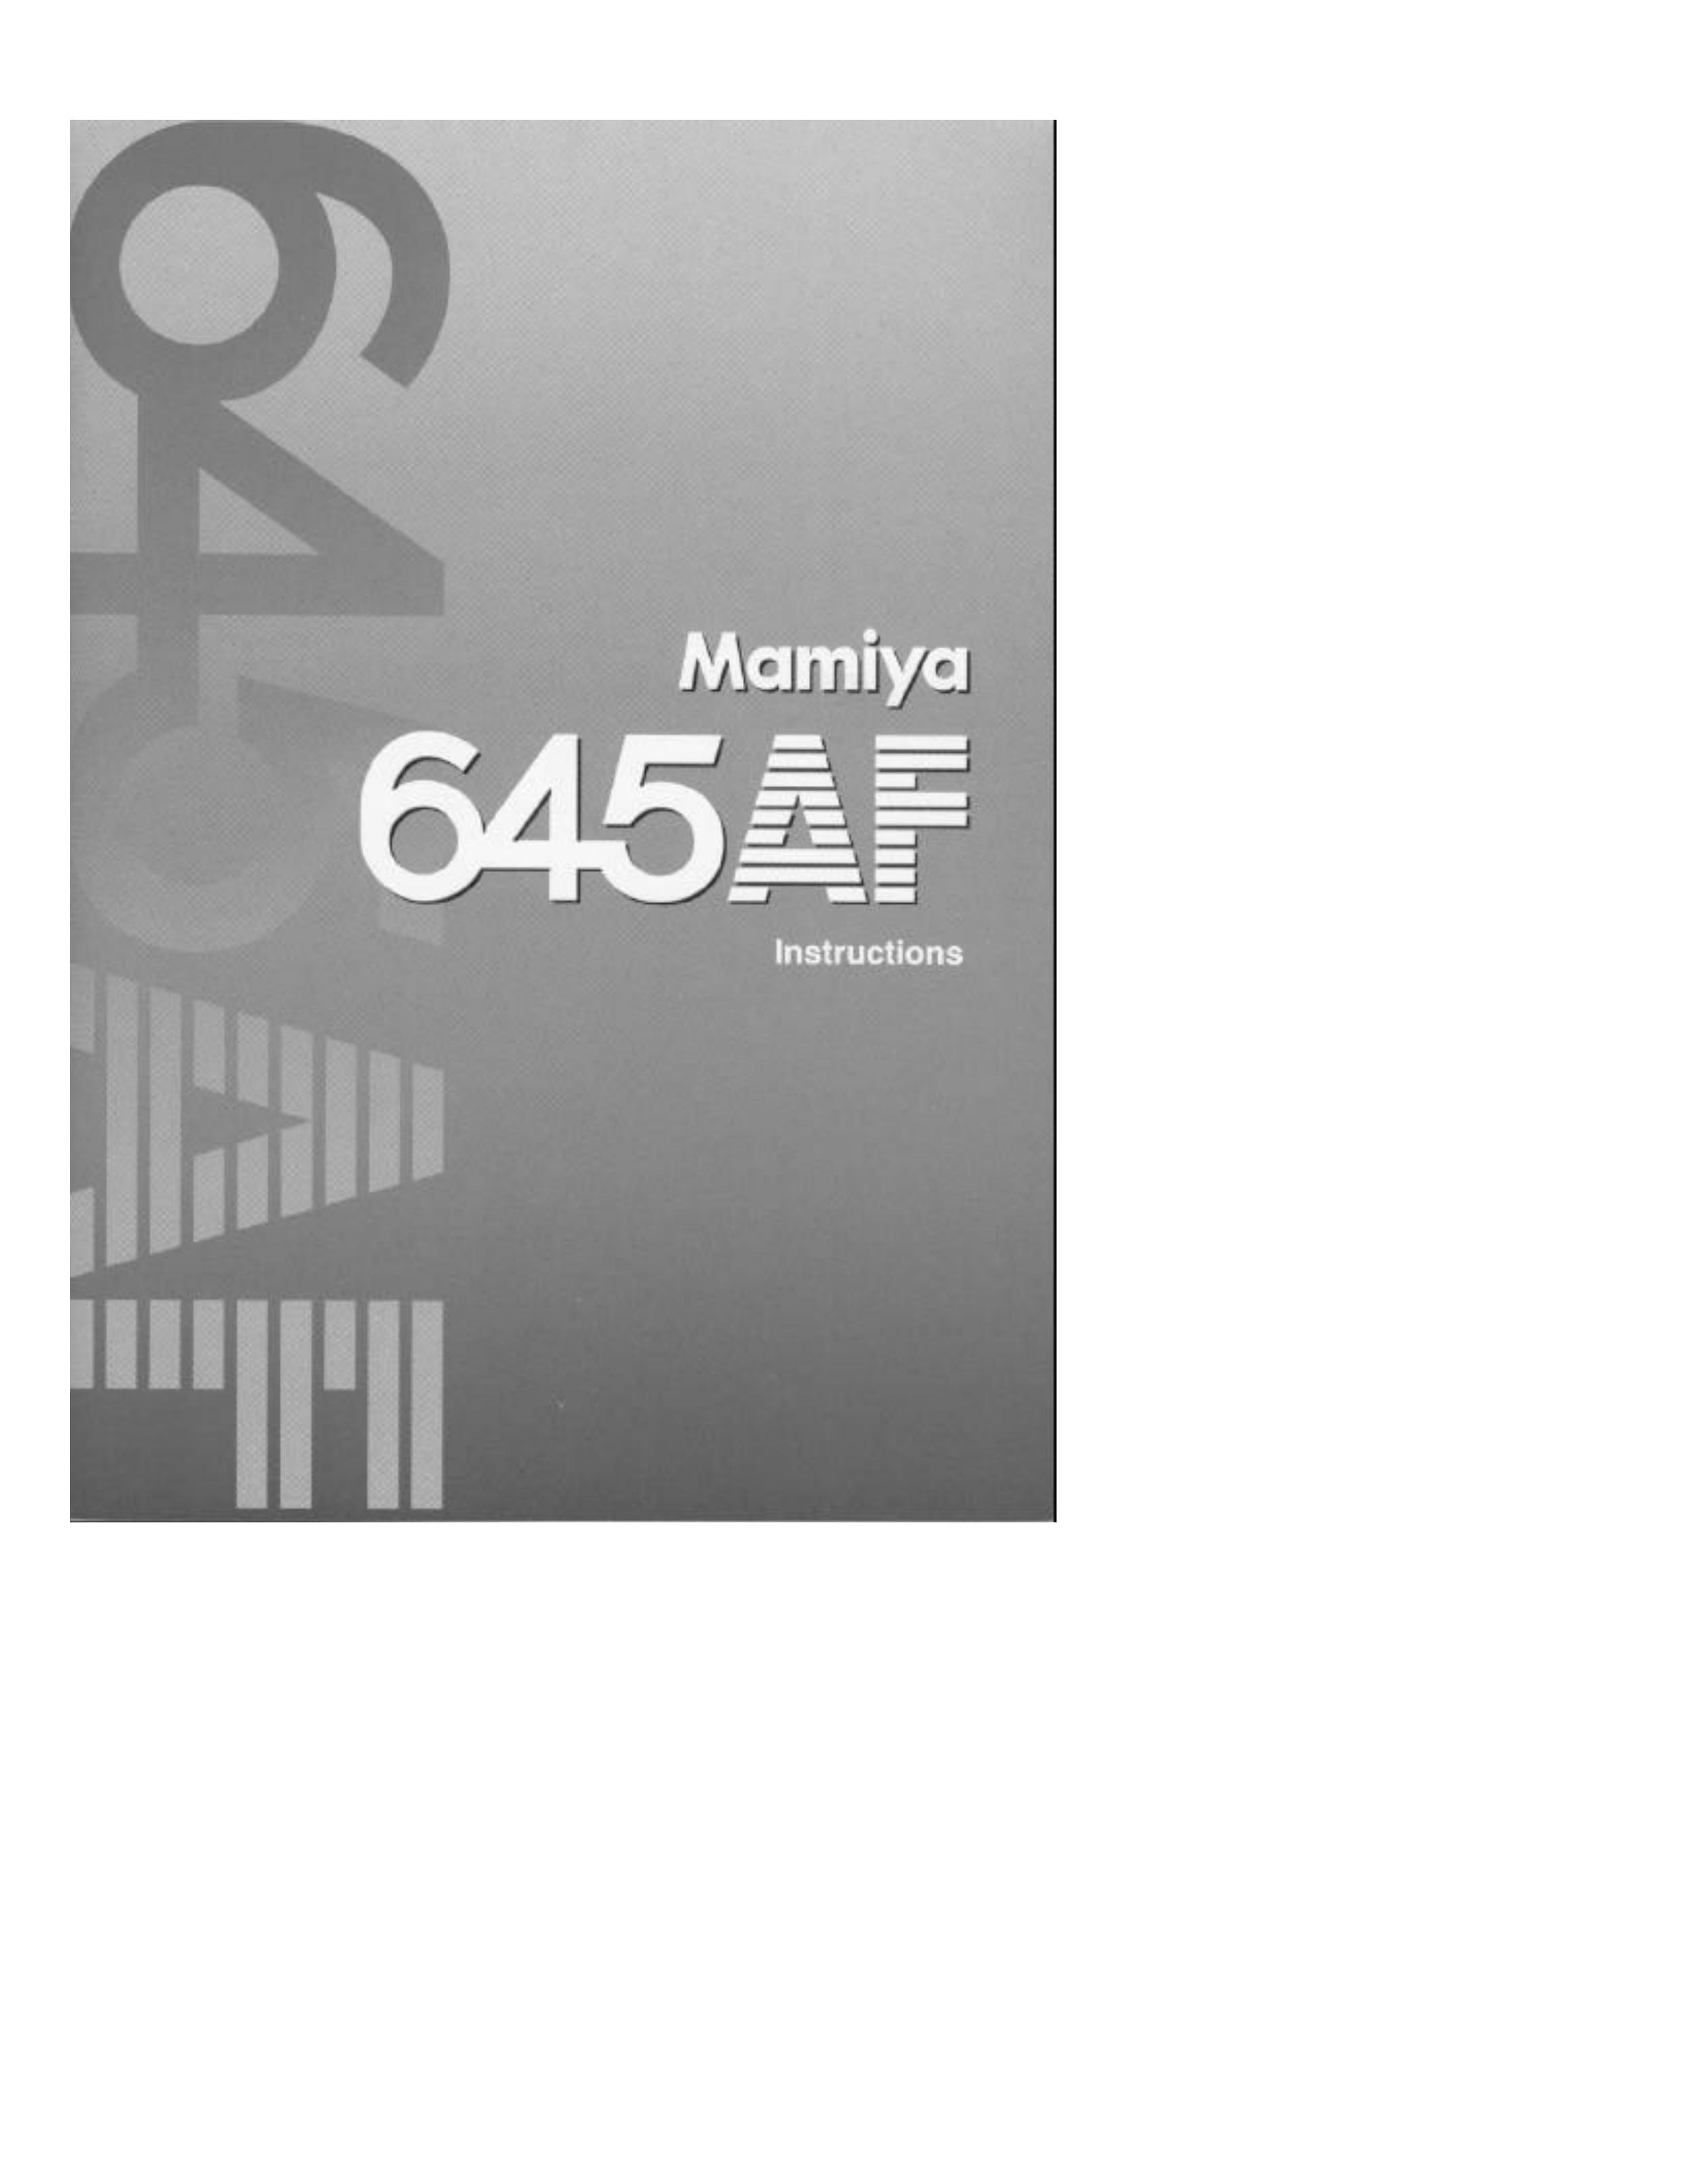 Mamiya 645 AF Digital Camera User Manual